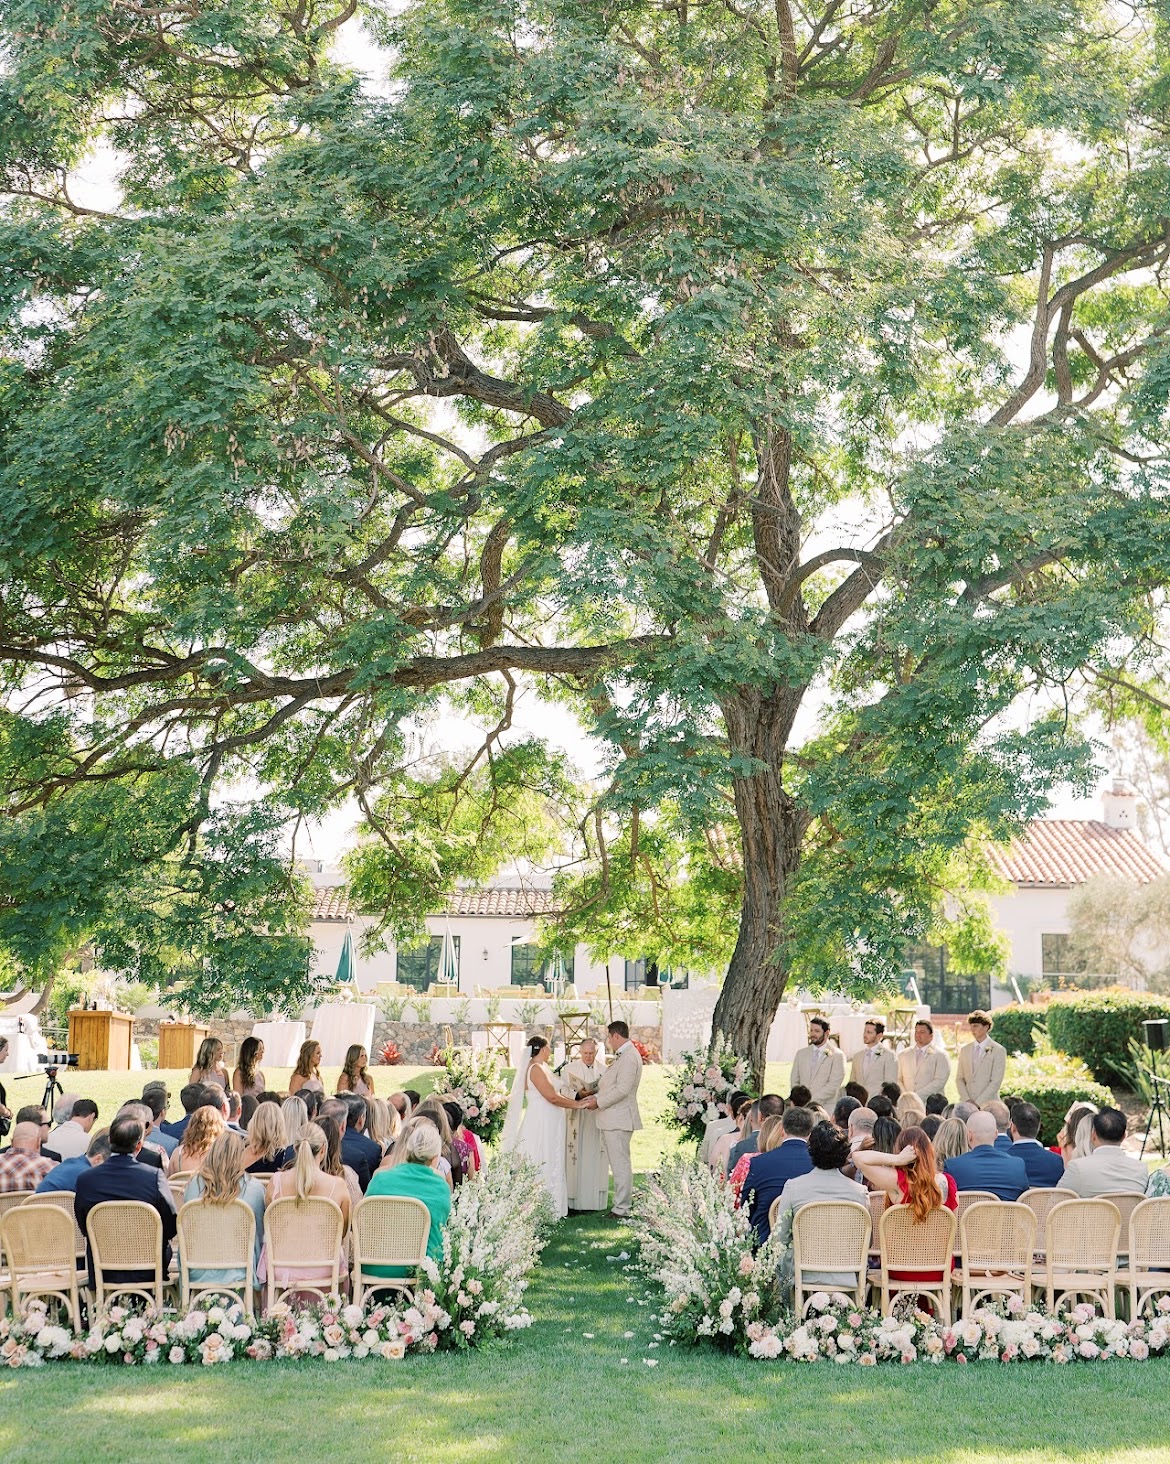 Guests enjoy the destination wedding at the Inn at Rancho Santa Fe in San Diego, California